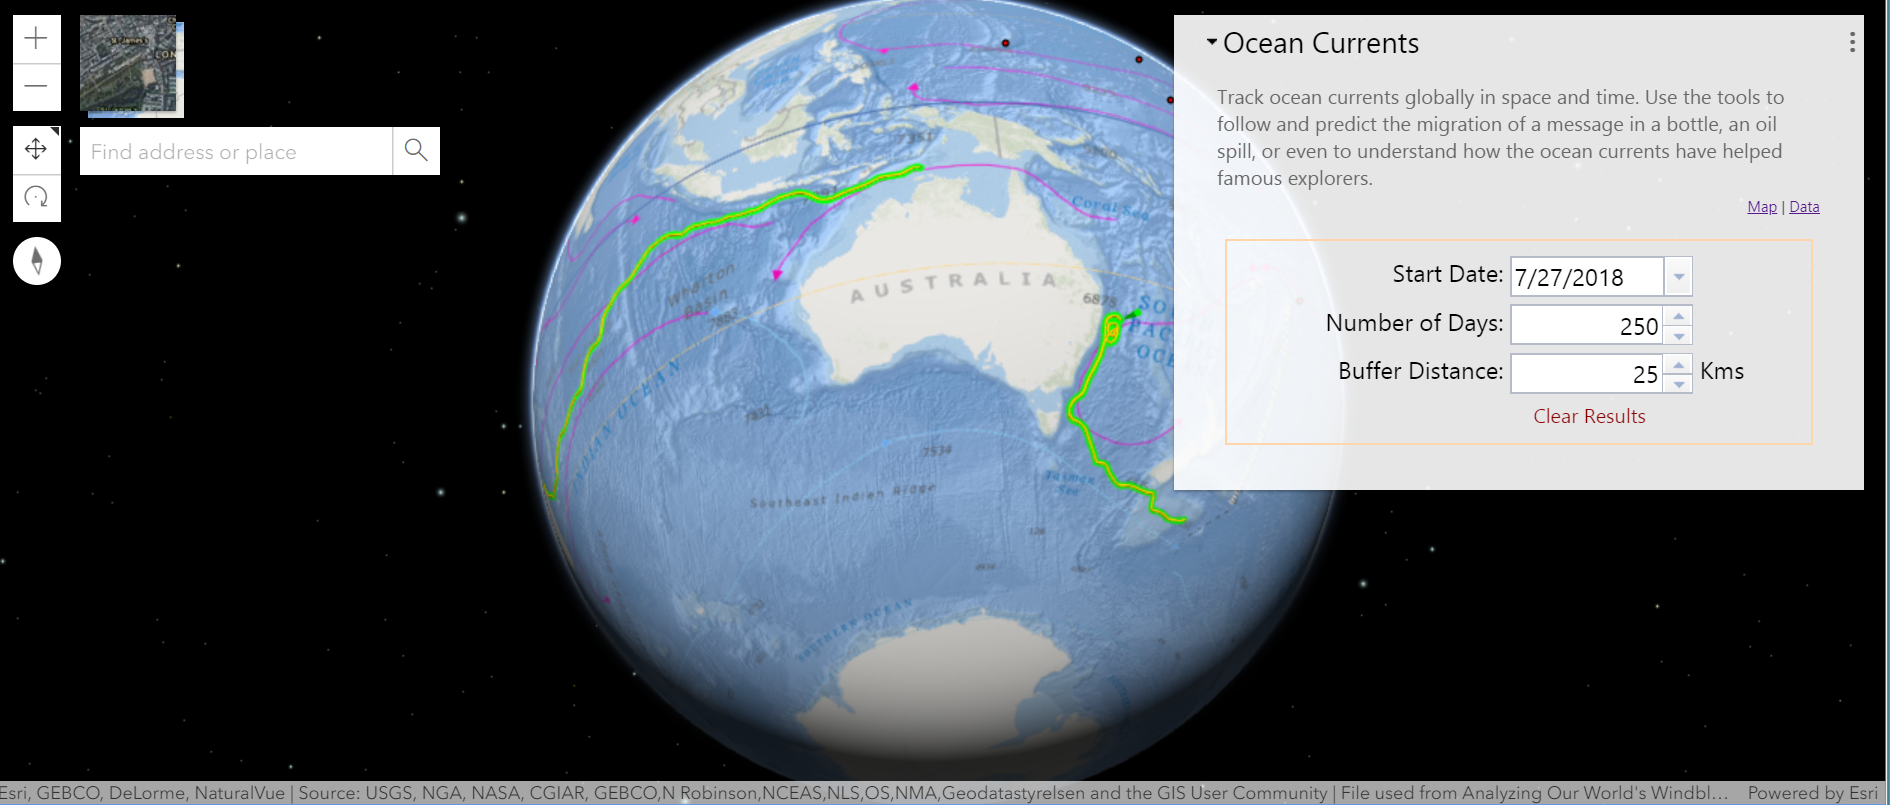 Ocean currents activity 2 